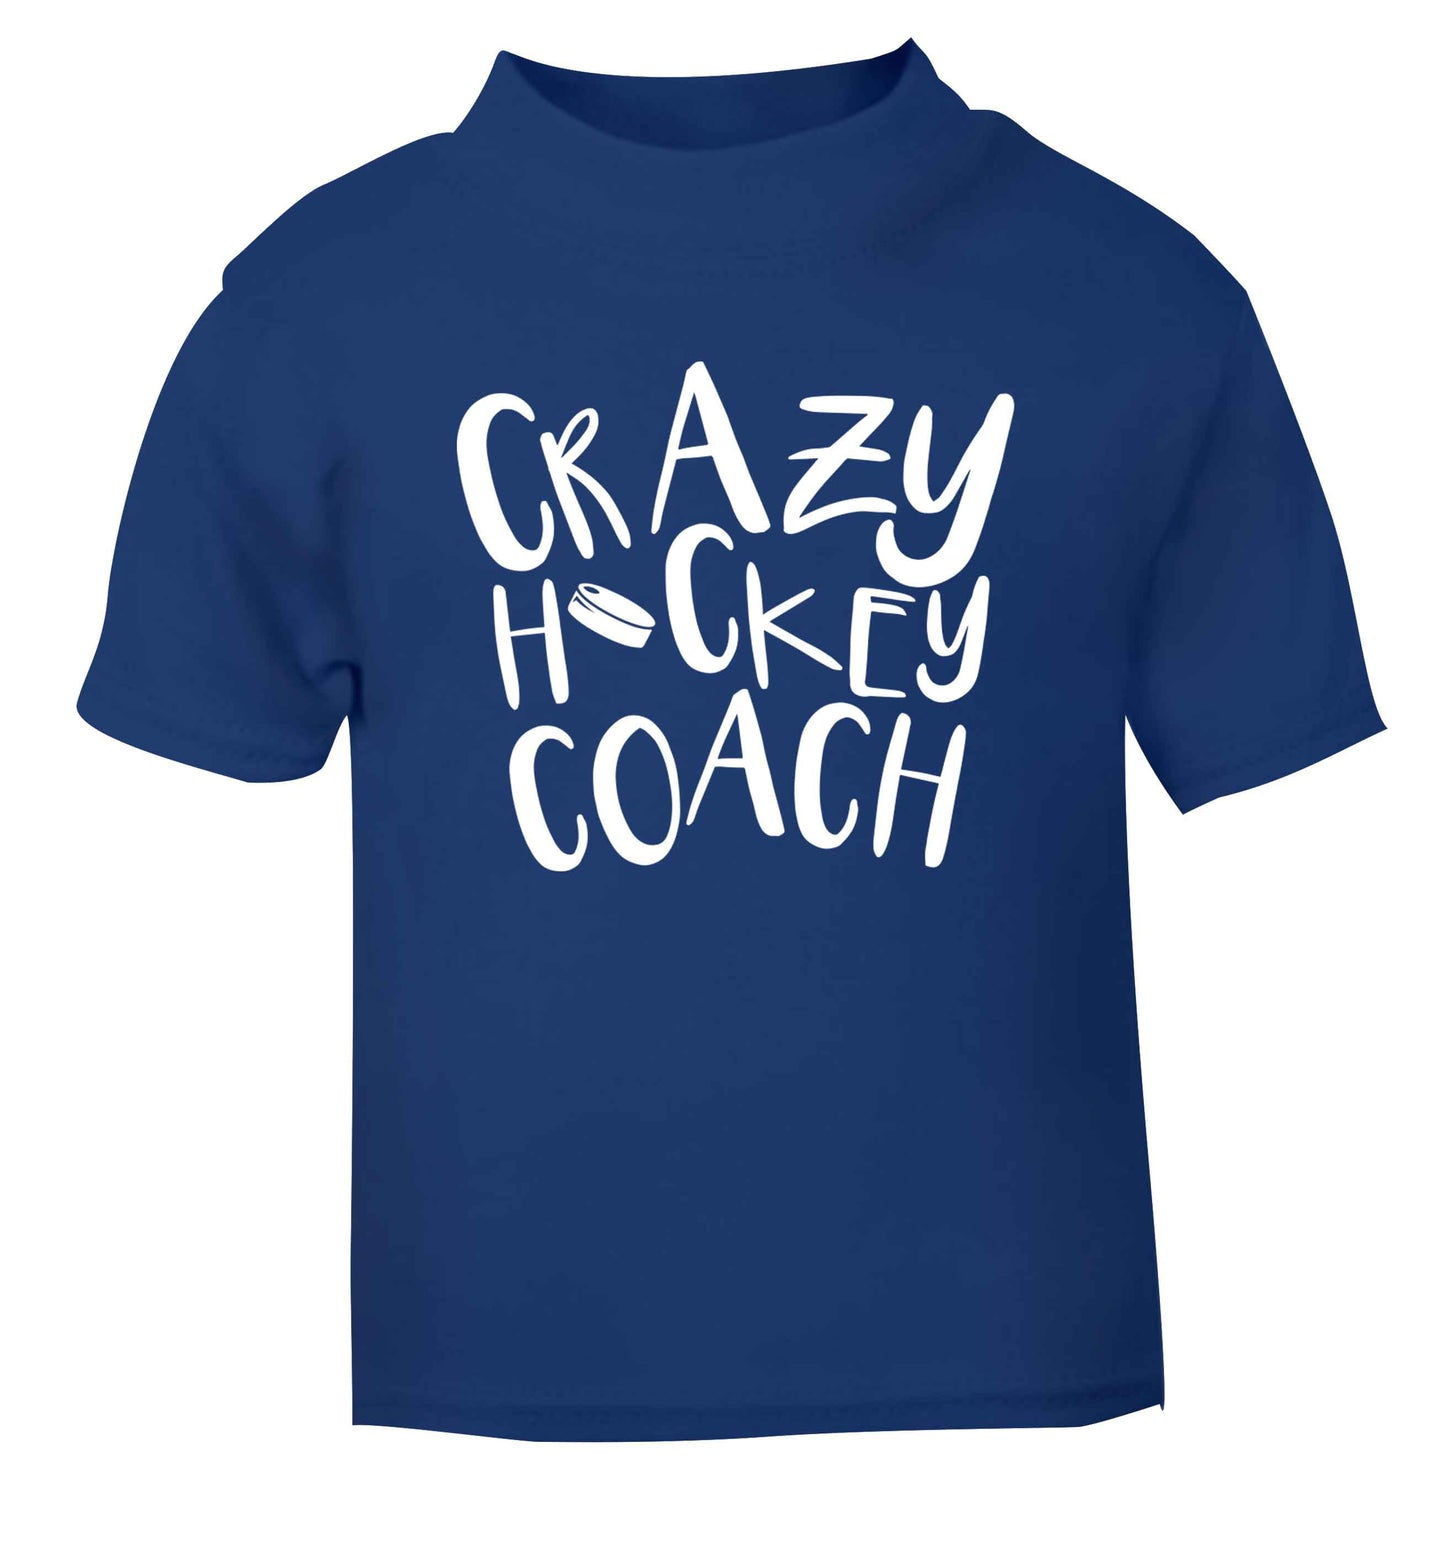 Crazy hockey coach blue Baby Toddler Tshirt 2 Years